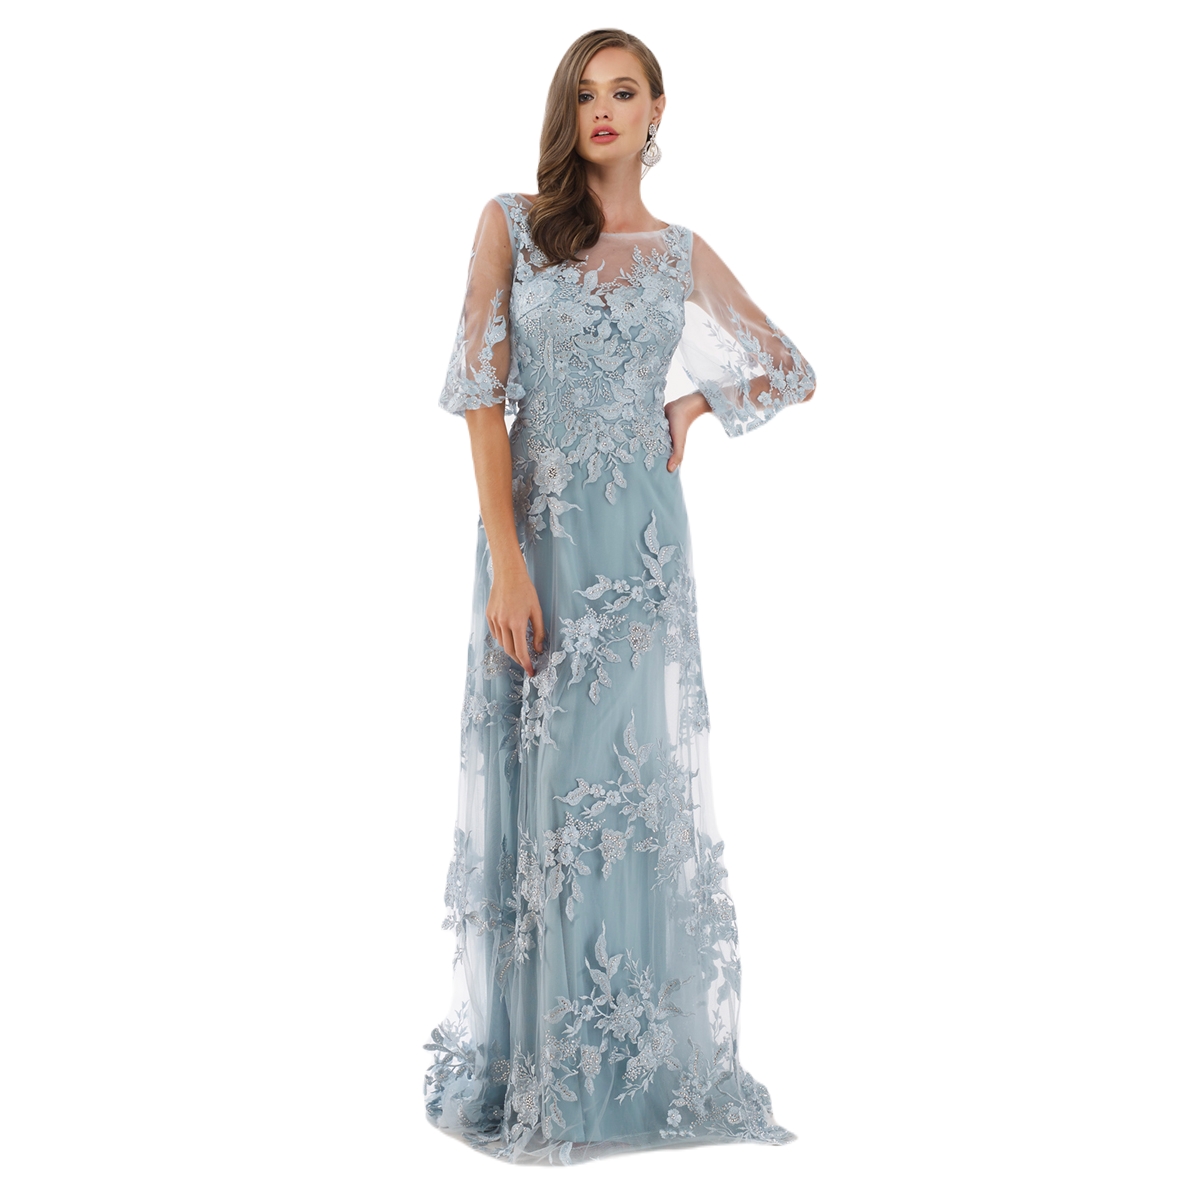 Edwardian Evening Gowns, Ballgowns, Formal Dresses Lara Cape Sleeves A-line Lace Gown - Dusk $598.00 AT vintagedancer.com